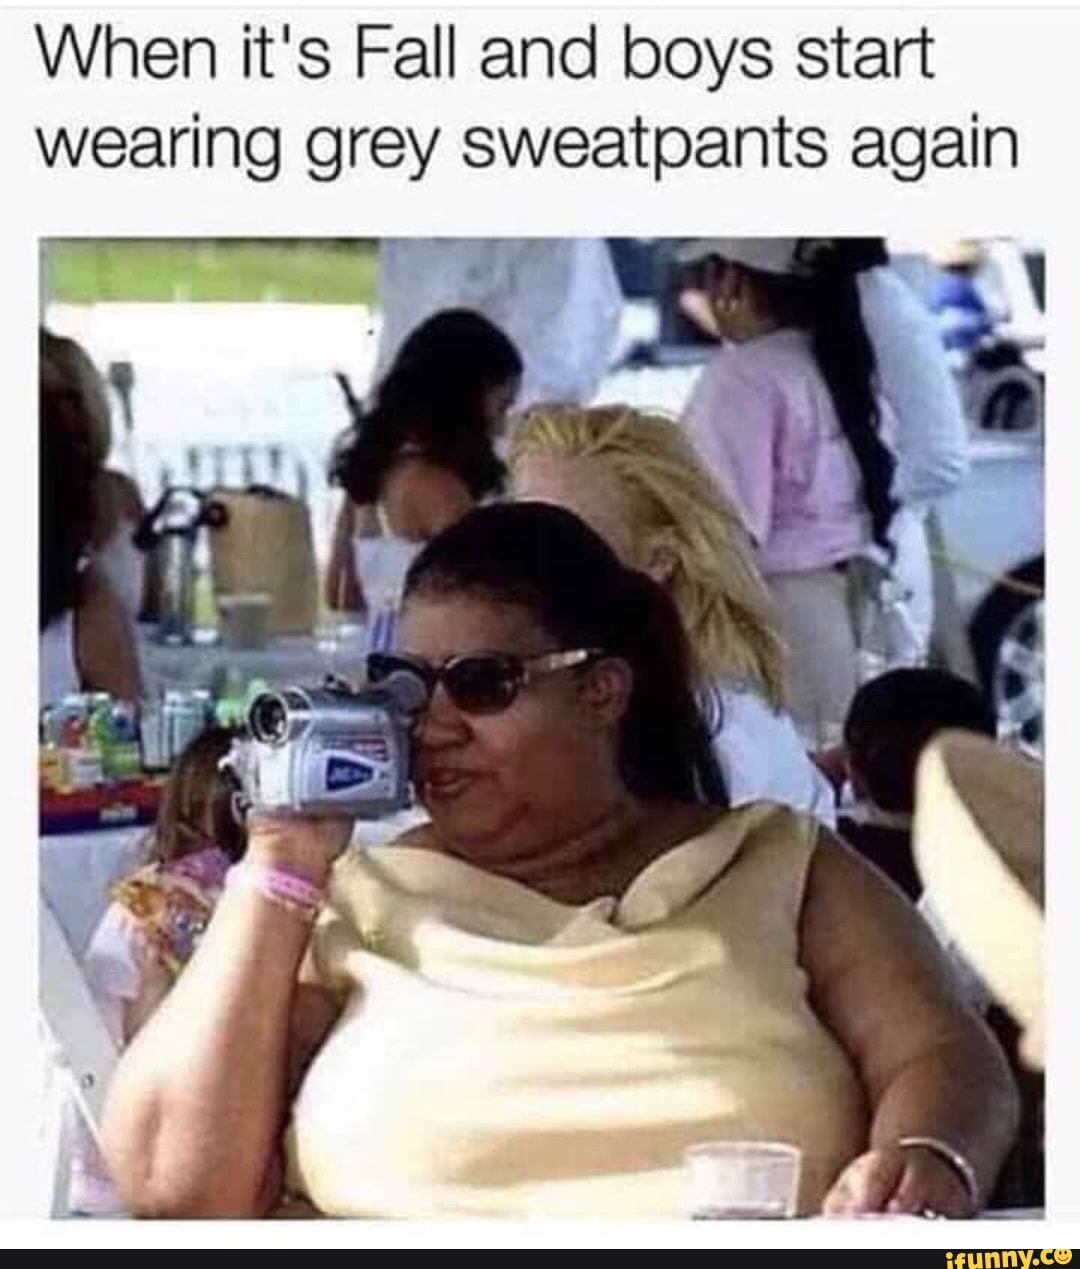 wearing grey sweatpants